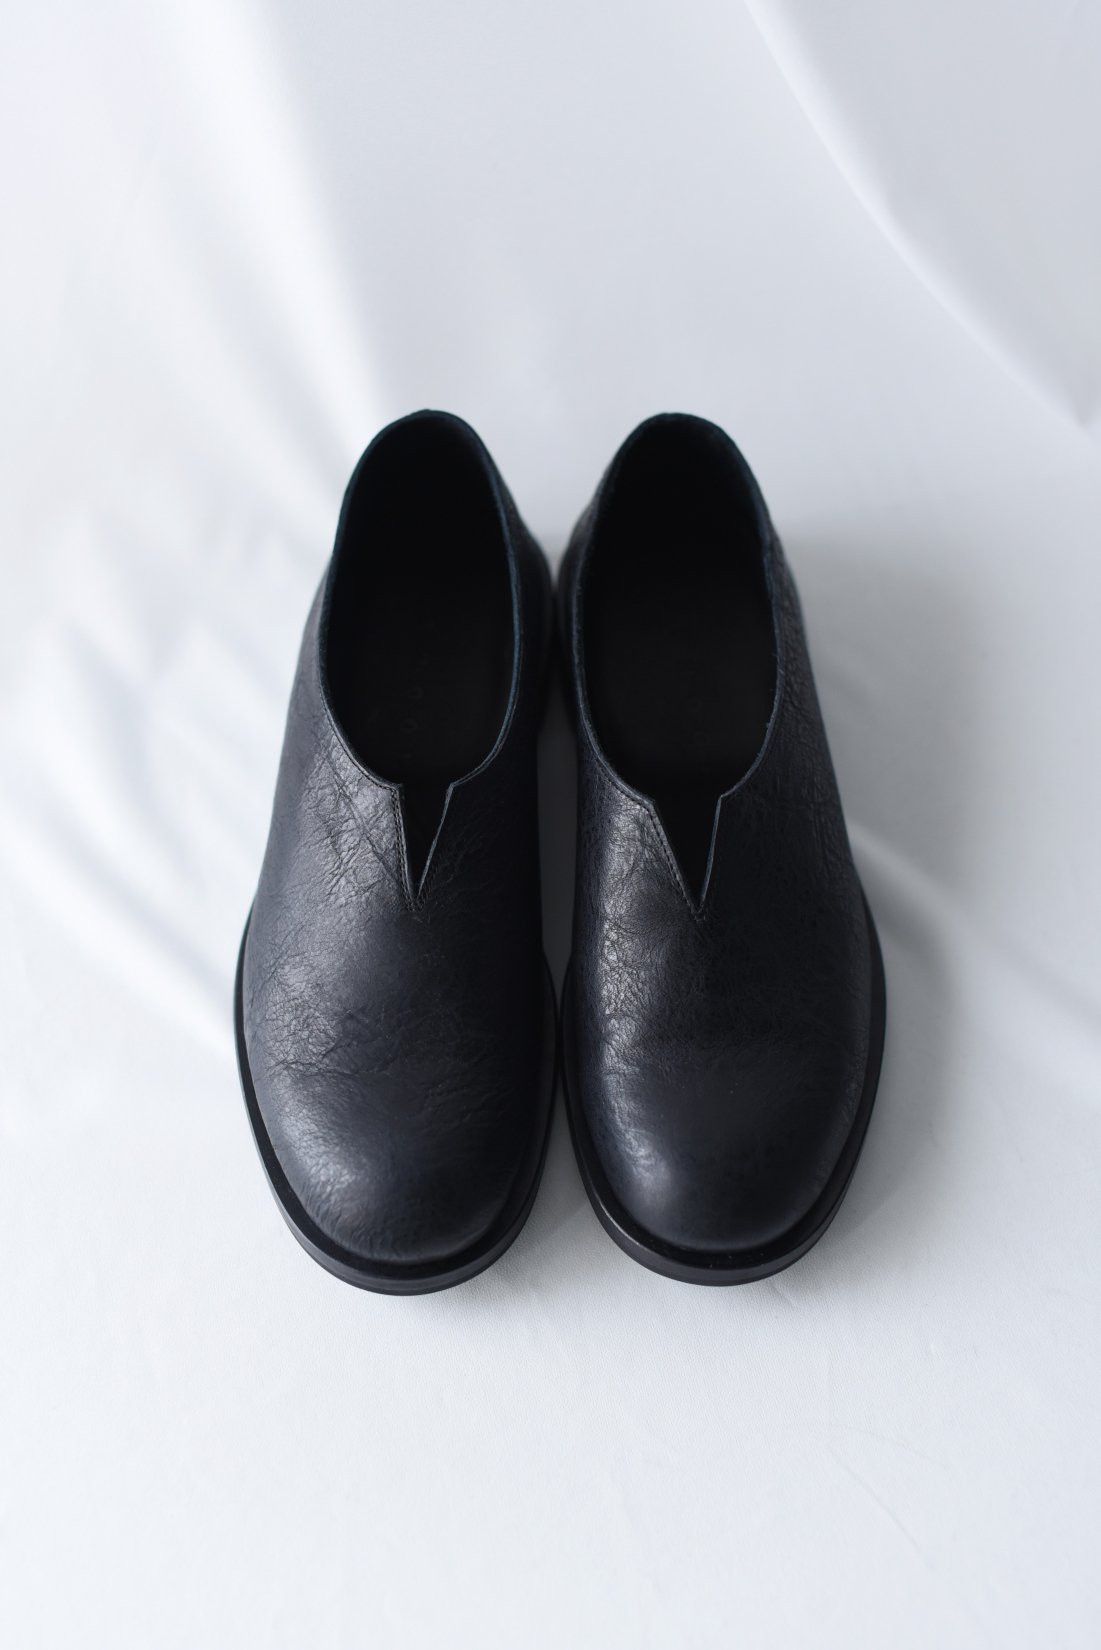 Yohji Yamamoto BISHOOL Lapel Leather Shoes | Grailed